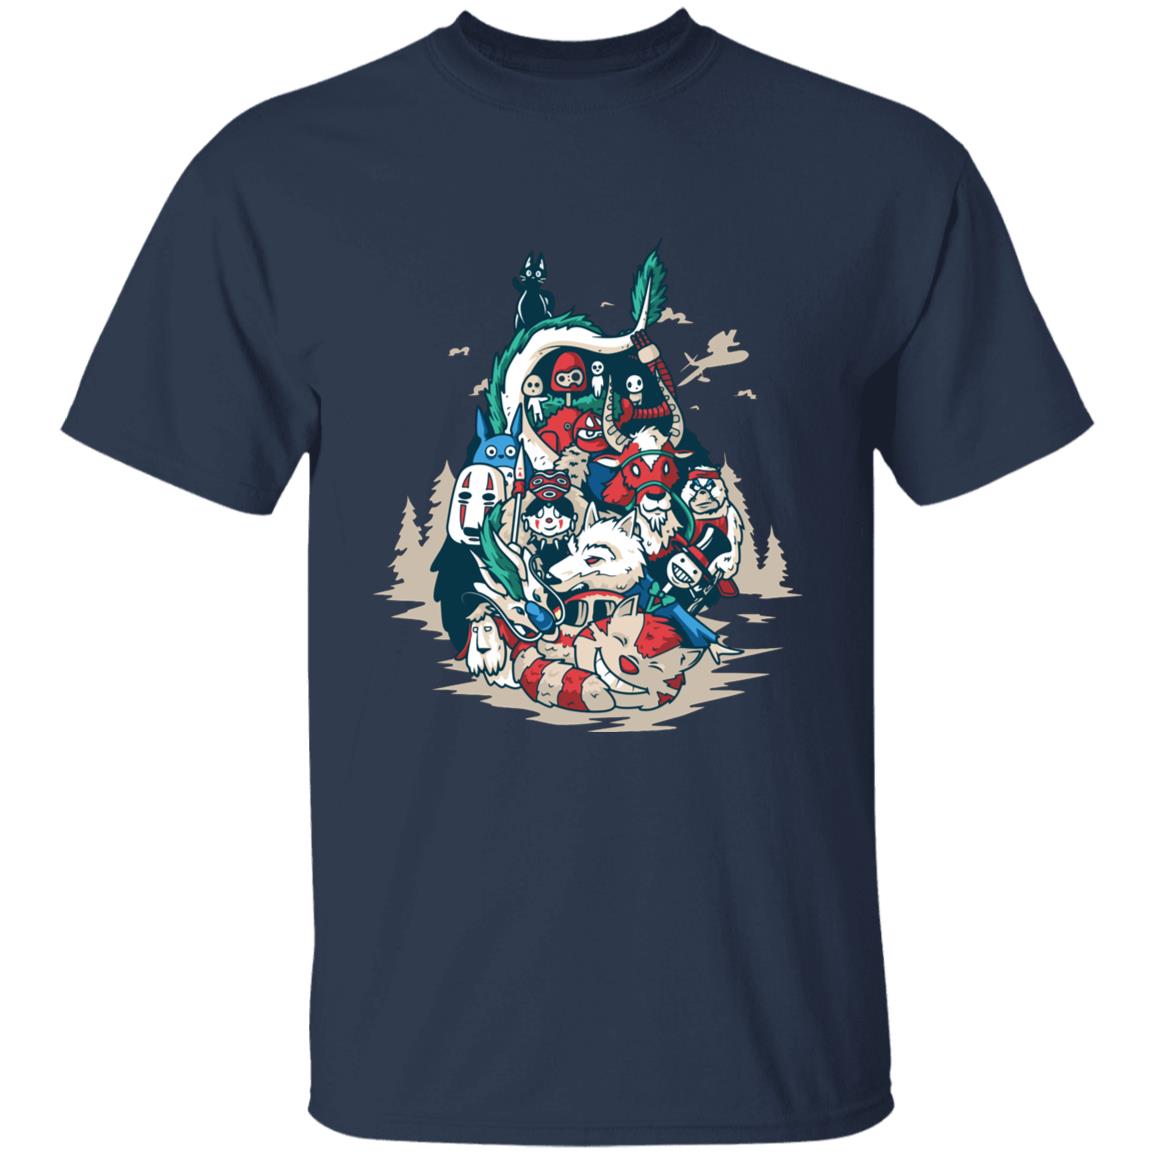 Ghibli universe in Totoro Shape T Shirt